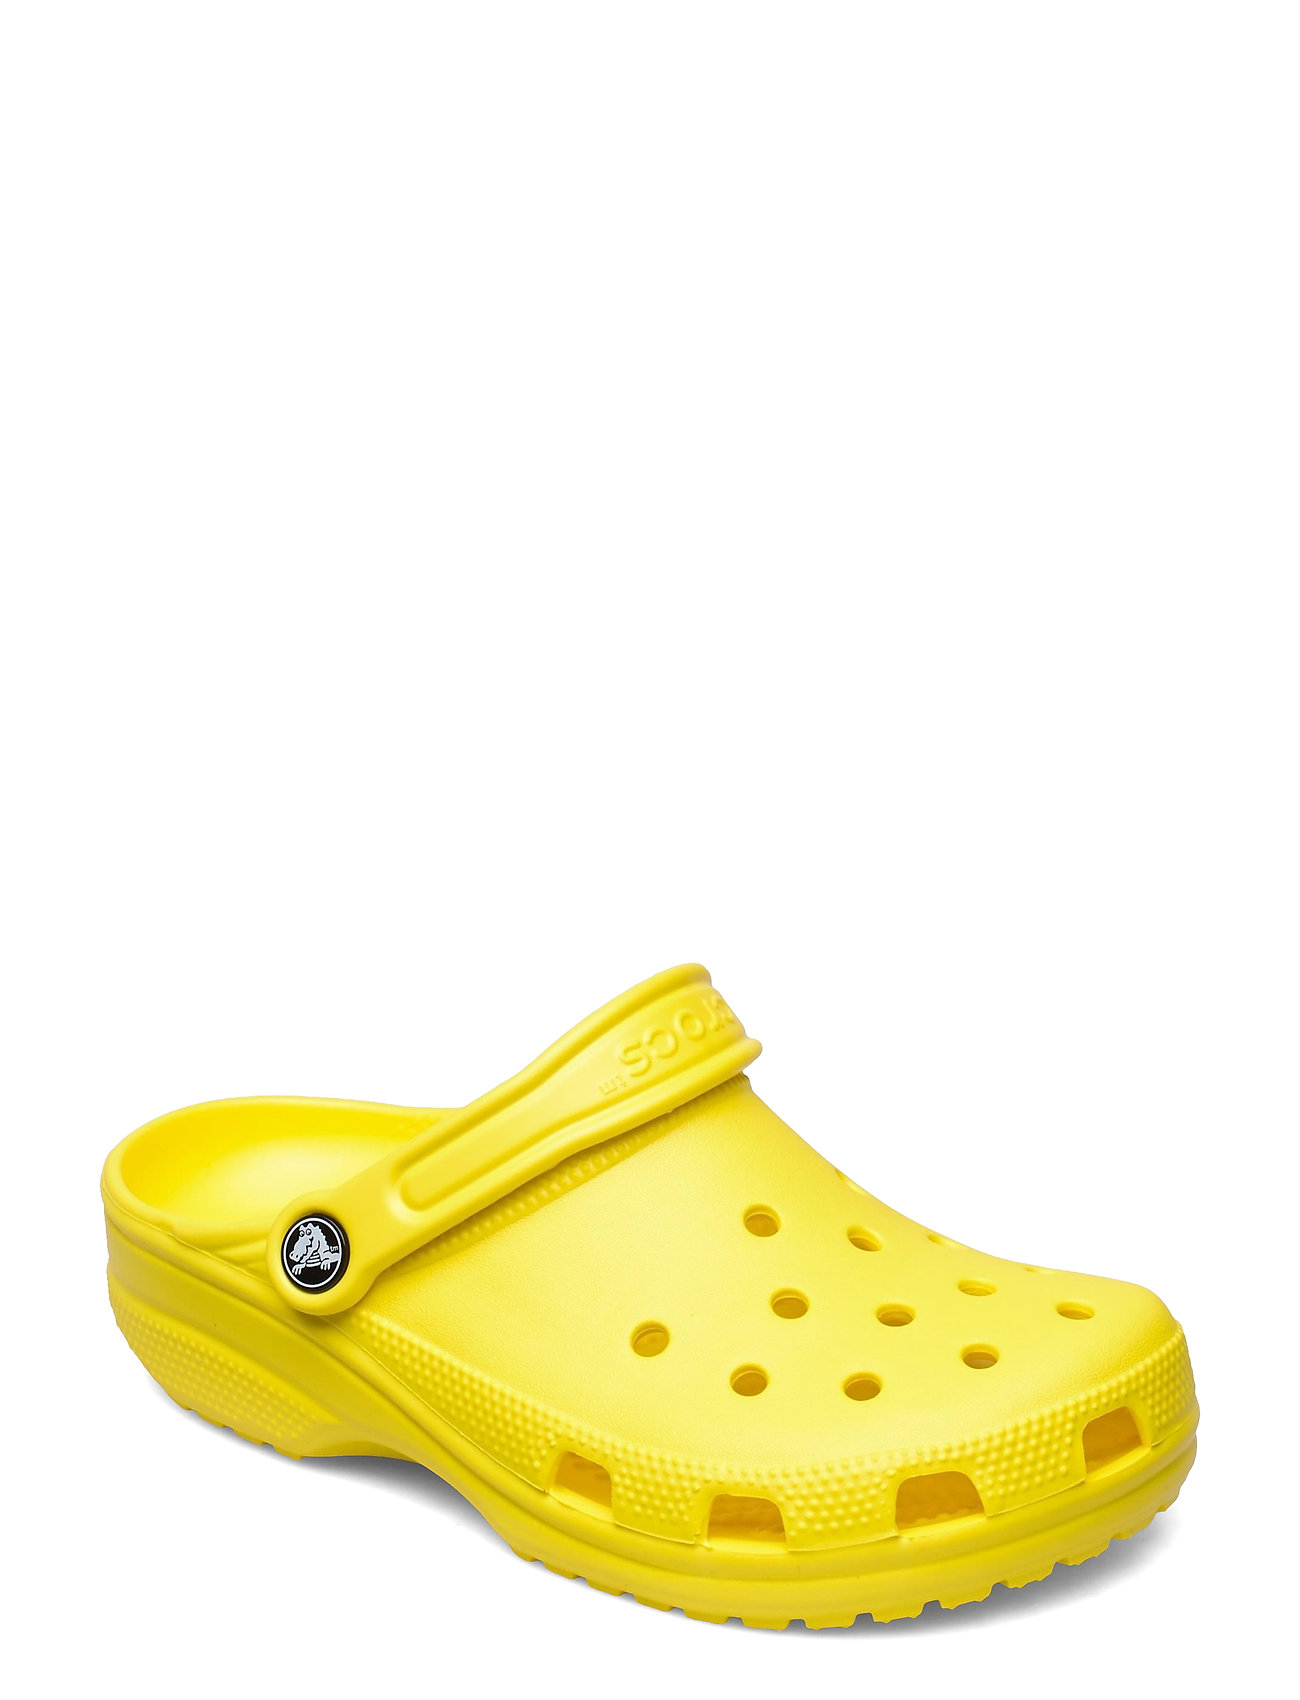 Crocs Classic (Lemon/Yellow) - 33.74 € | Boozt.com